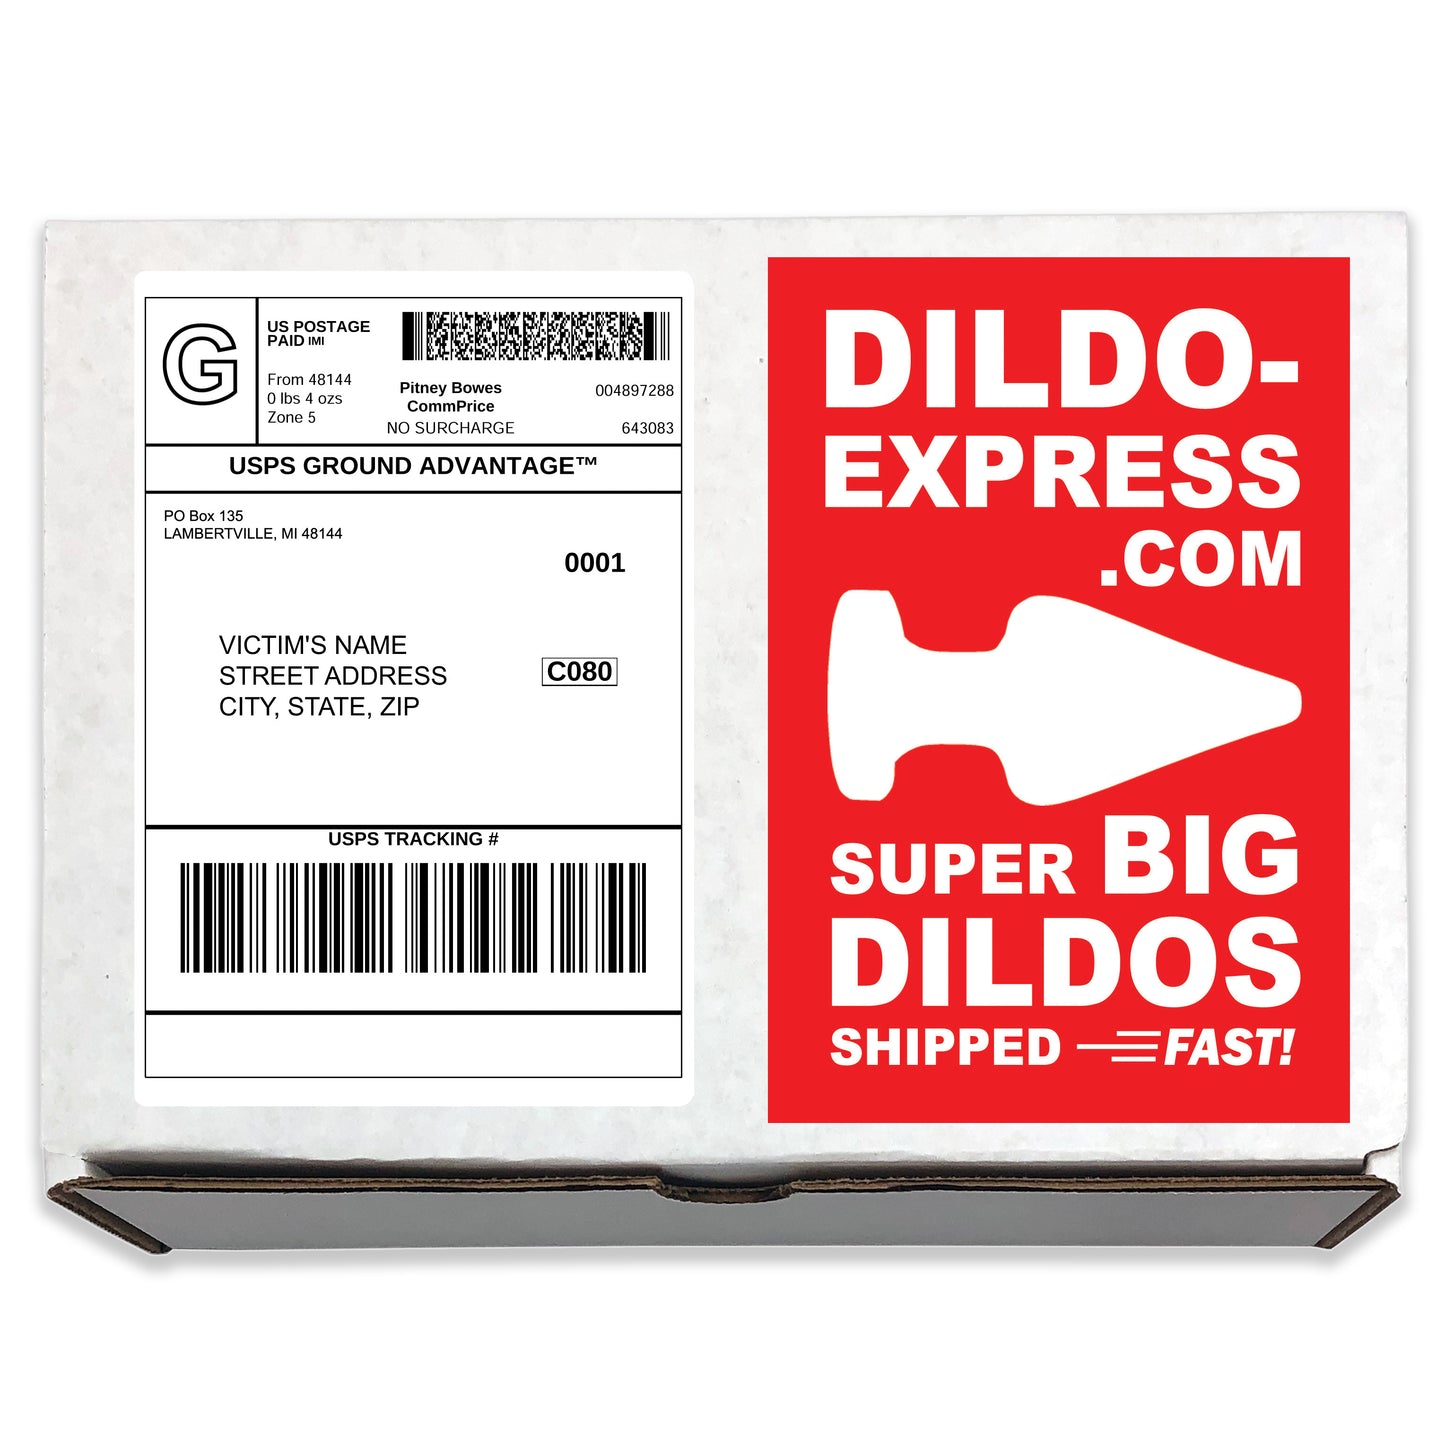 Dildo Express Prank Joke